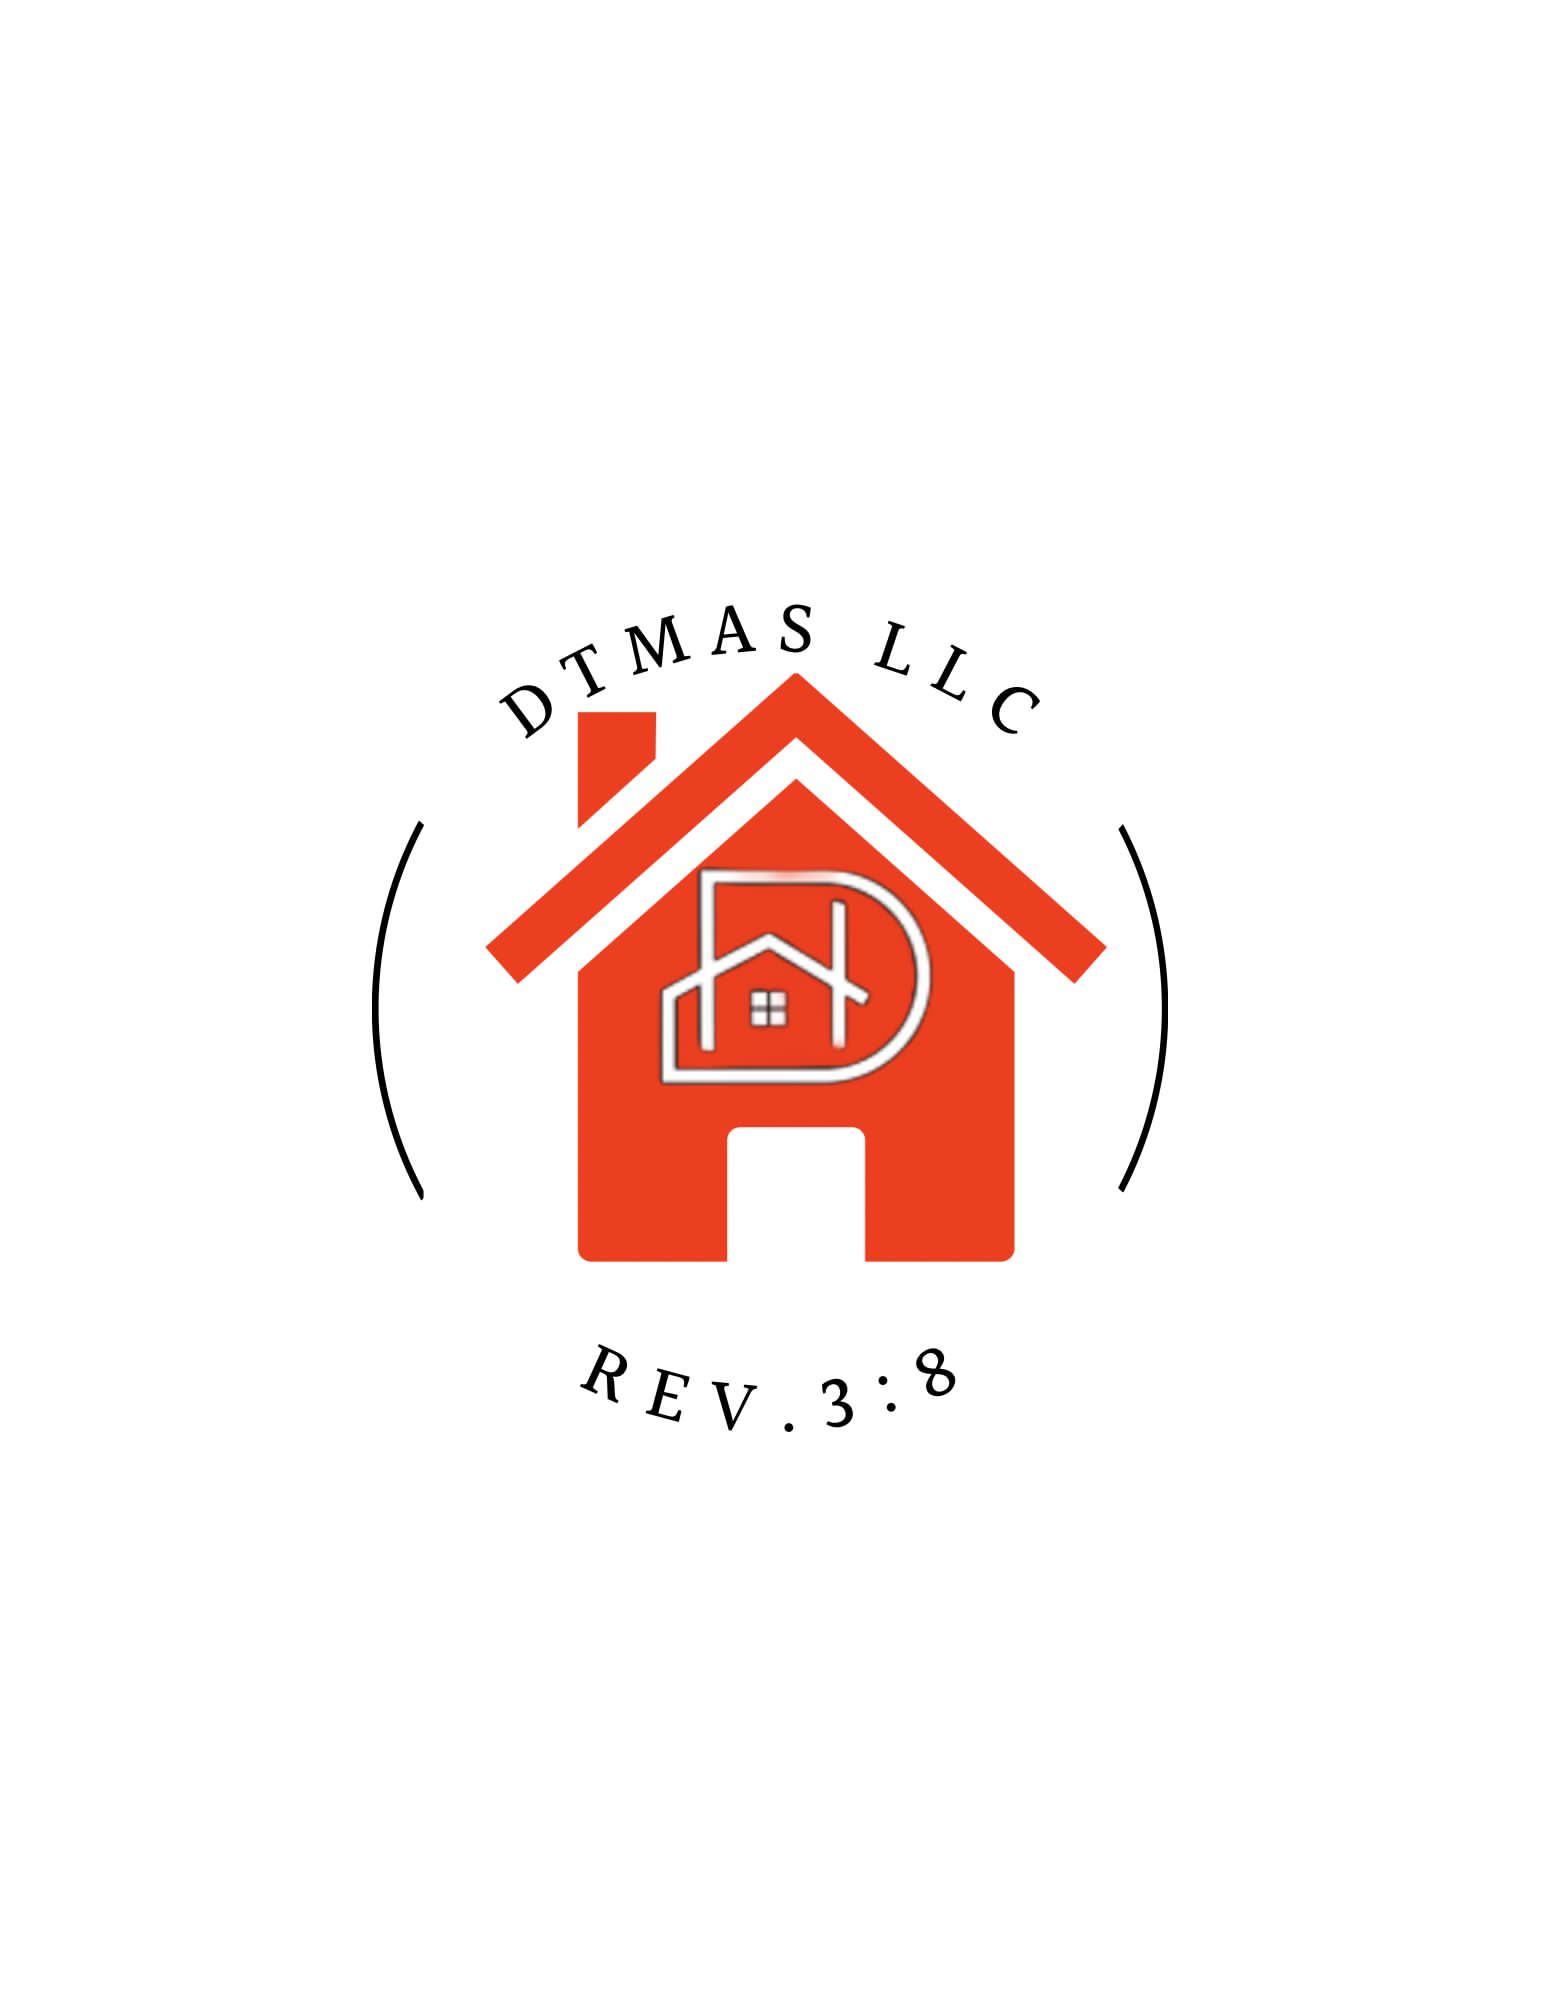 DTMAS, LLC Logo